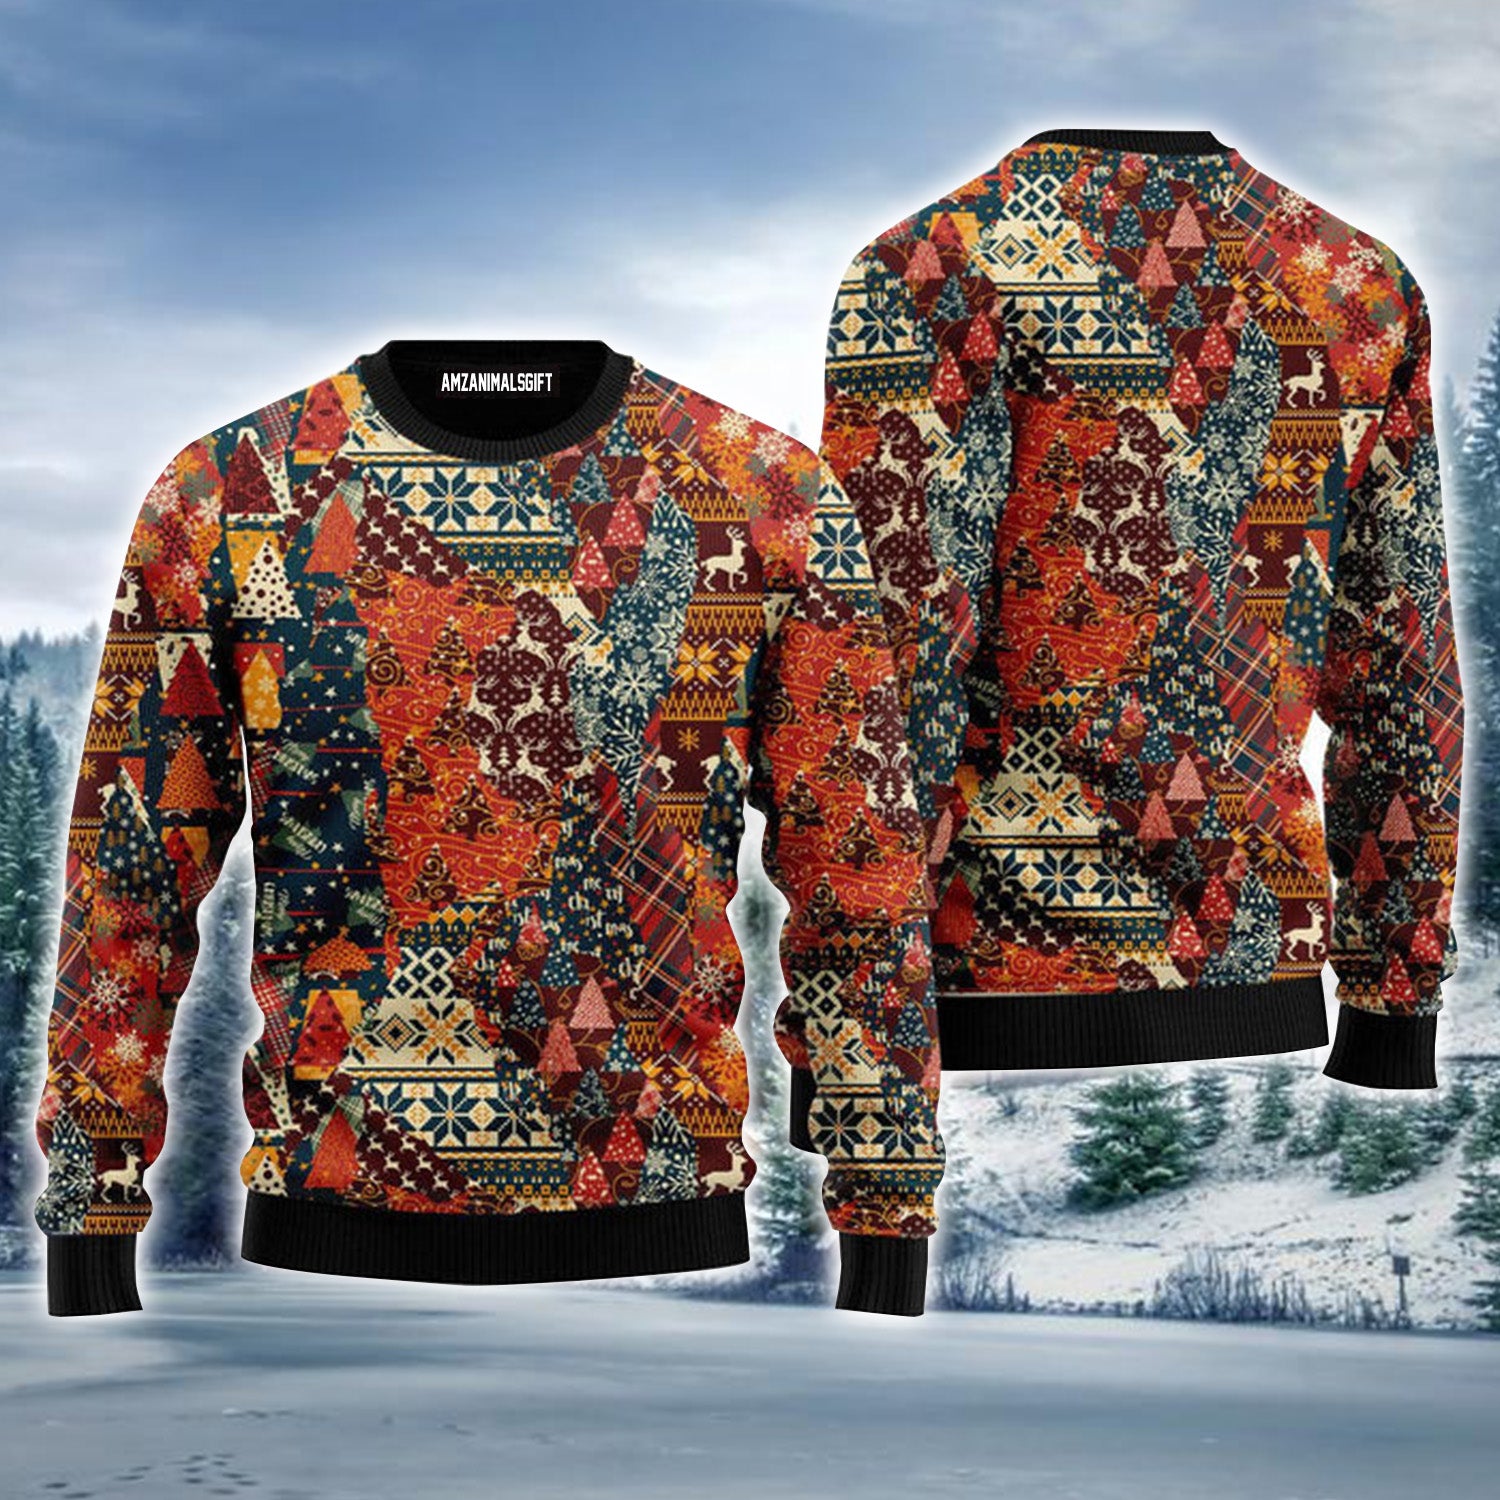 Xmas Fancy Pathwork Urly Christmas Sweater, Christmas Sweater For Men & Women - Perfect Gift For Christmas, New Year, Winter Holiday